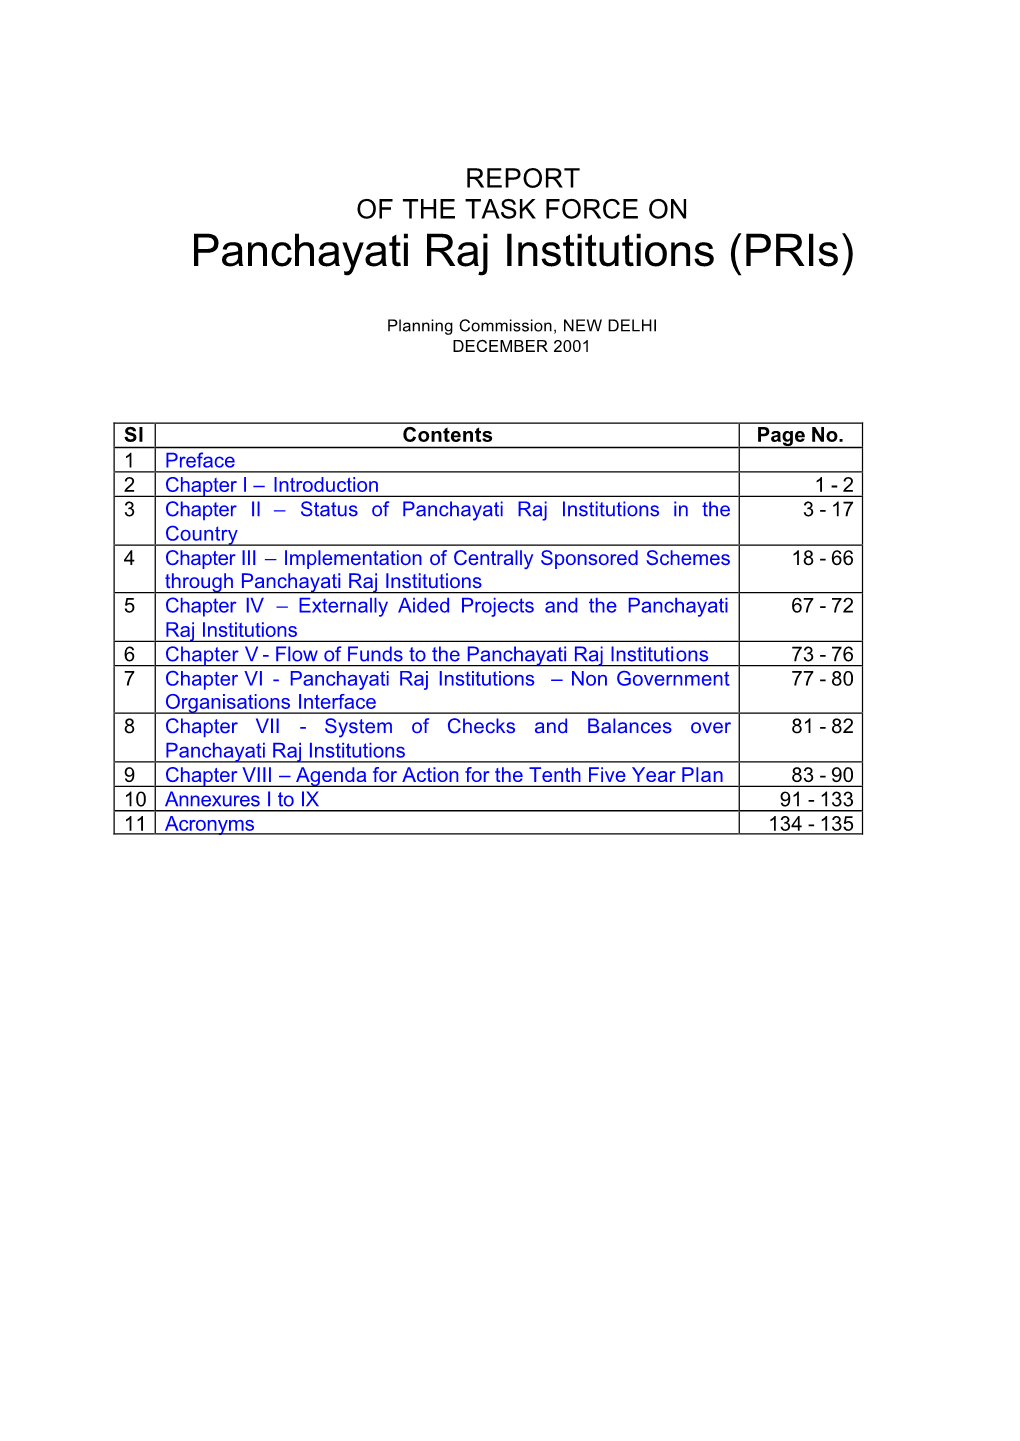 Report of the Task Force on Panchayati Raj Institutions (Pris)